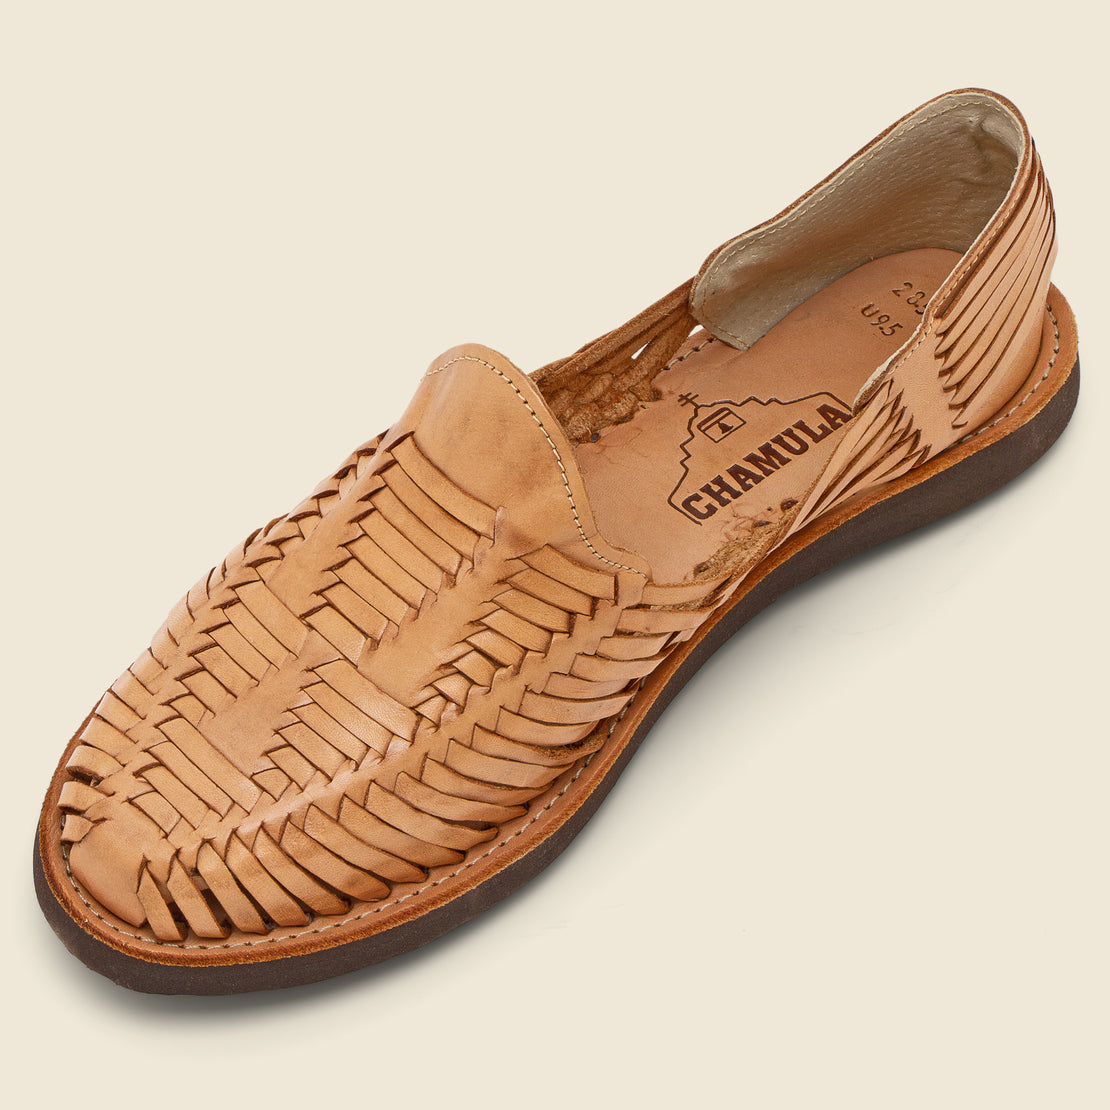 Cancun Huarache - Tan - Chamula - STAG Provisions - Shoes - Sandals / Flops